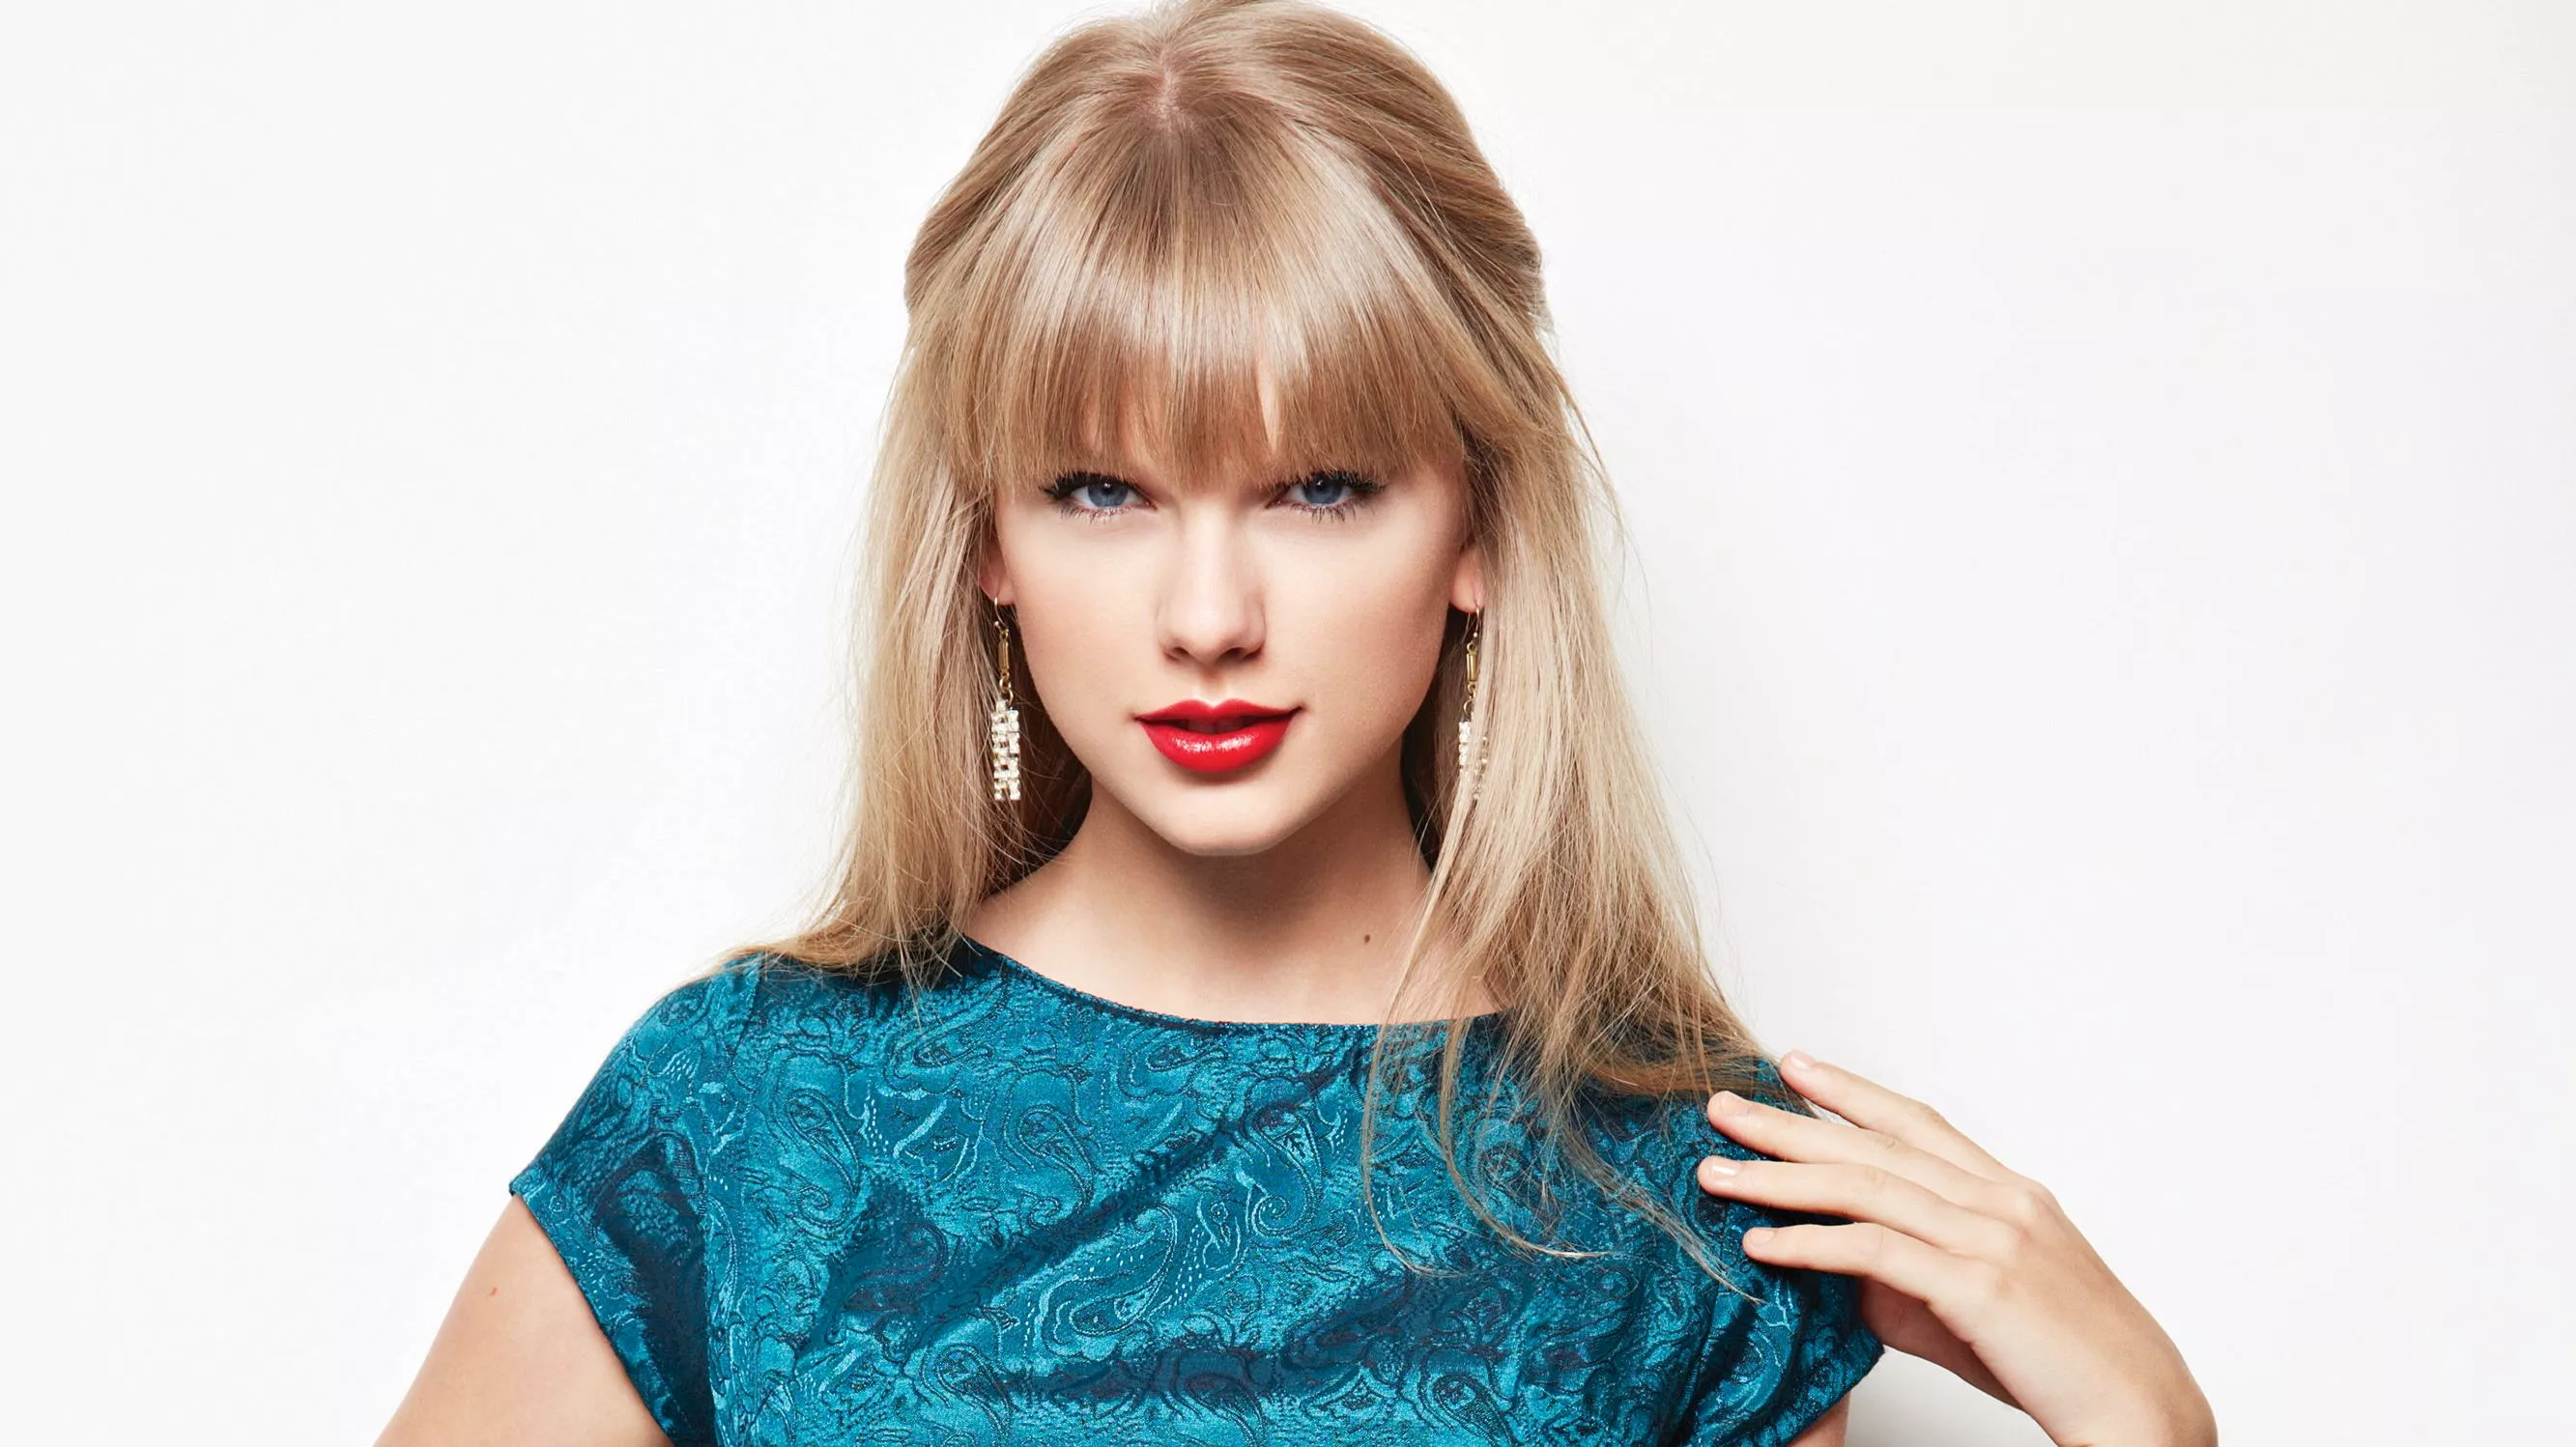 Er Taylor Swift for grådig?